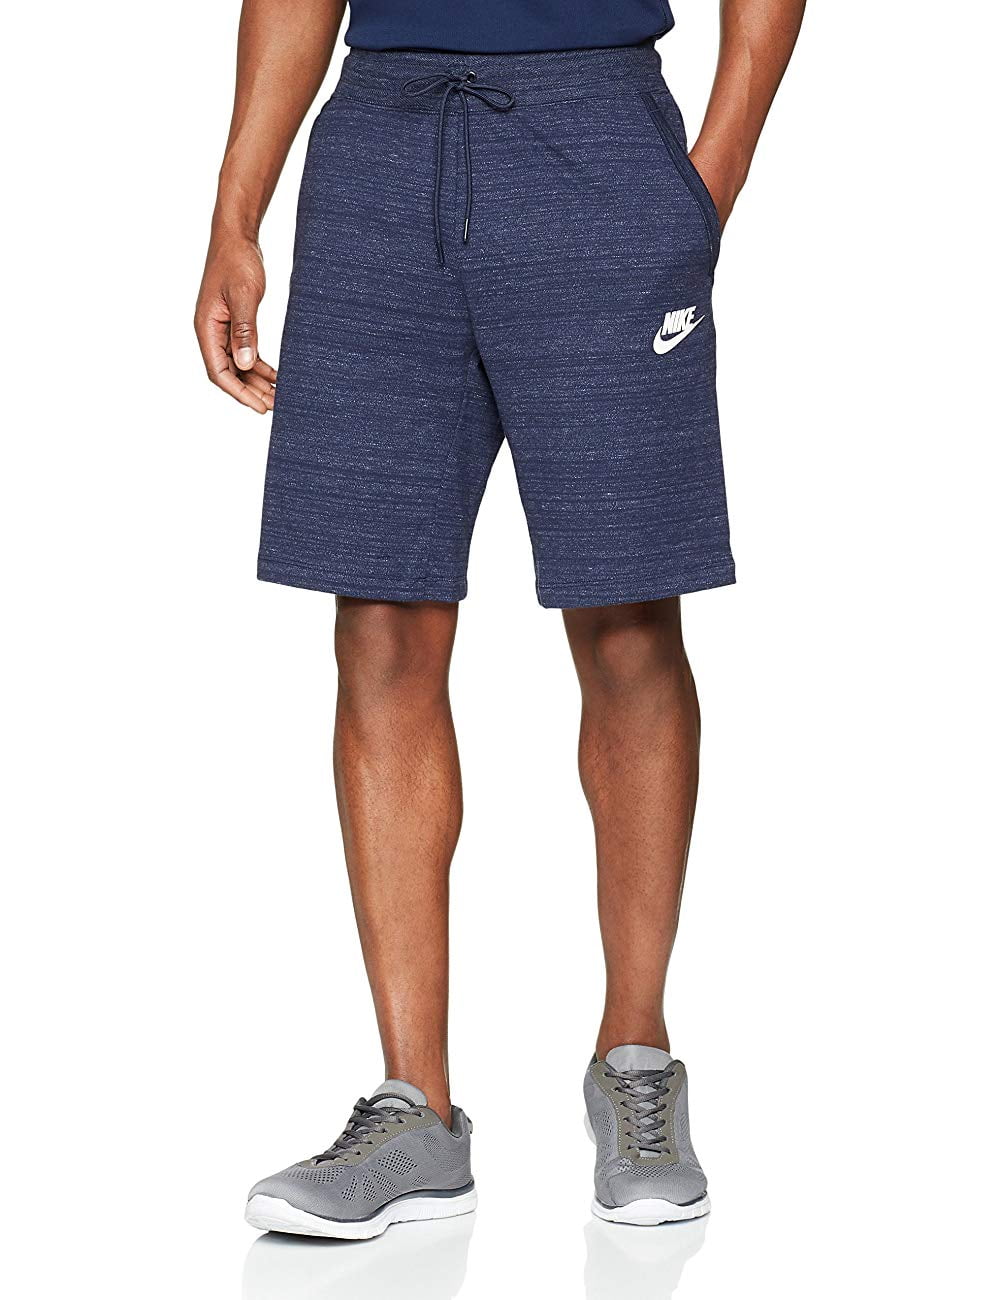 Nike Advance Knit Shorts Mens Style : - Walmart.com